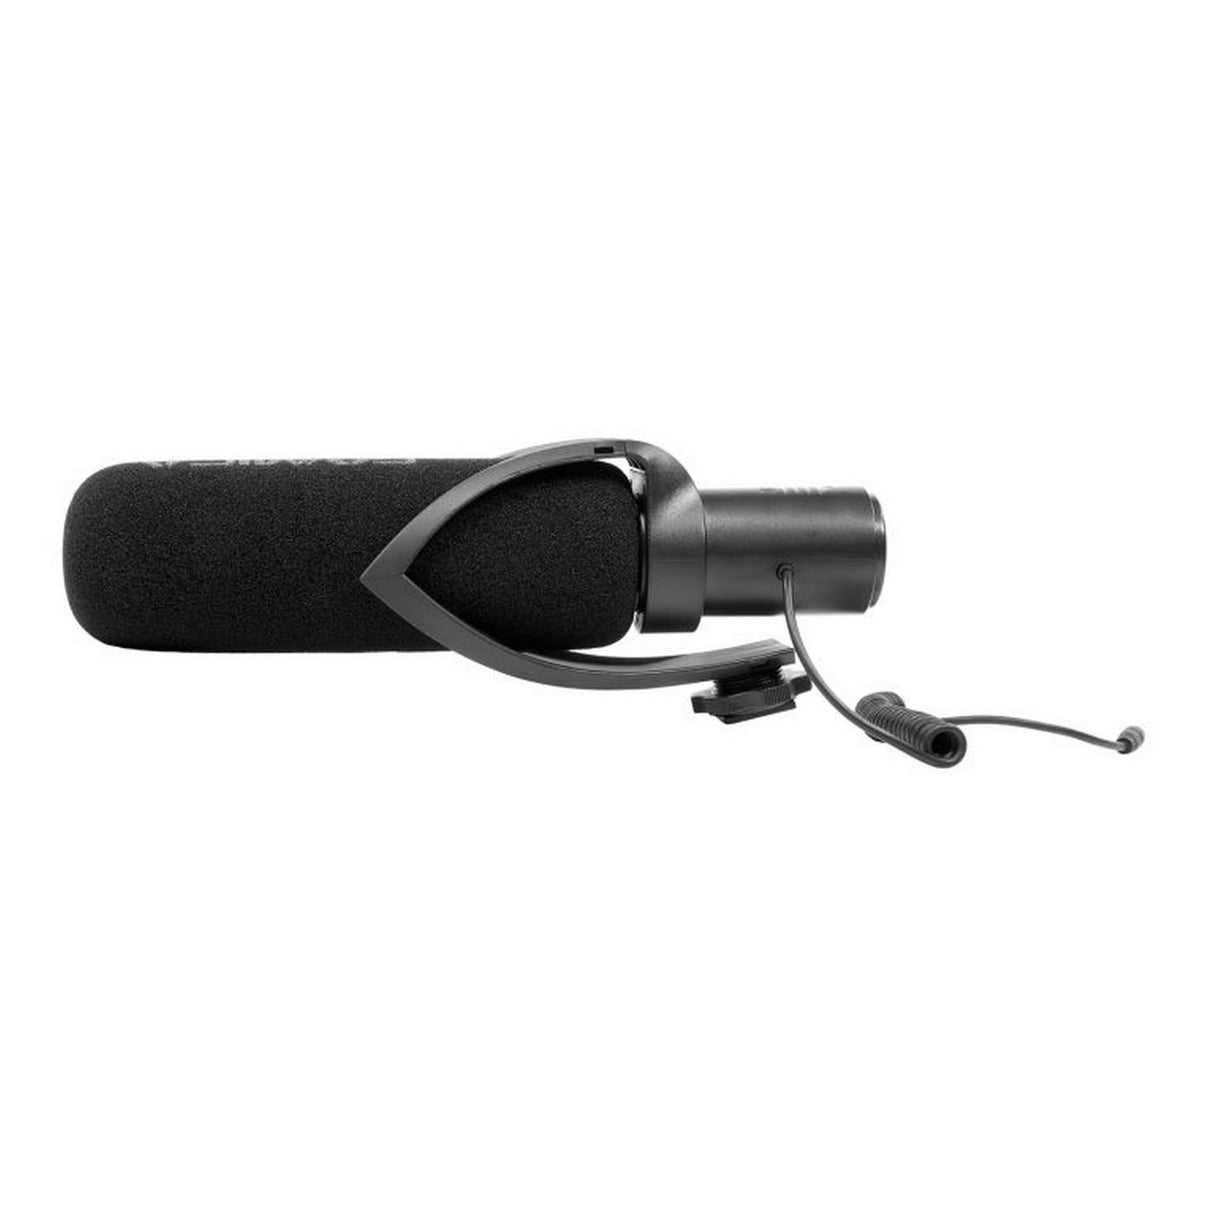 Comica CVM-V30-PRO-B Supercardioid Shotgun Microphone with3.5mm Jack, Black